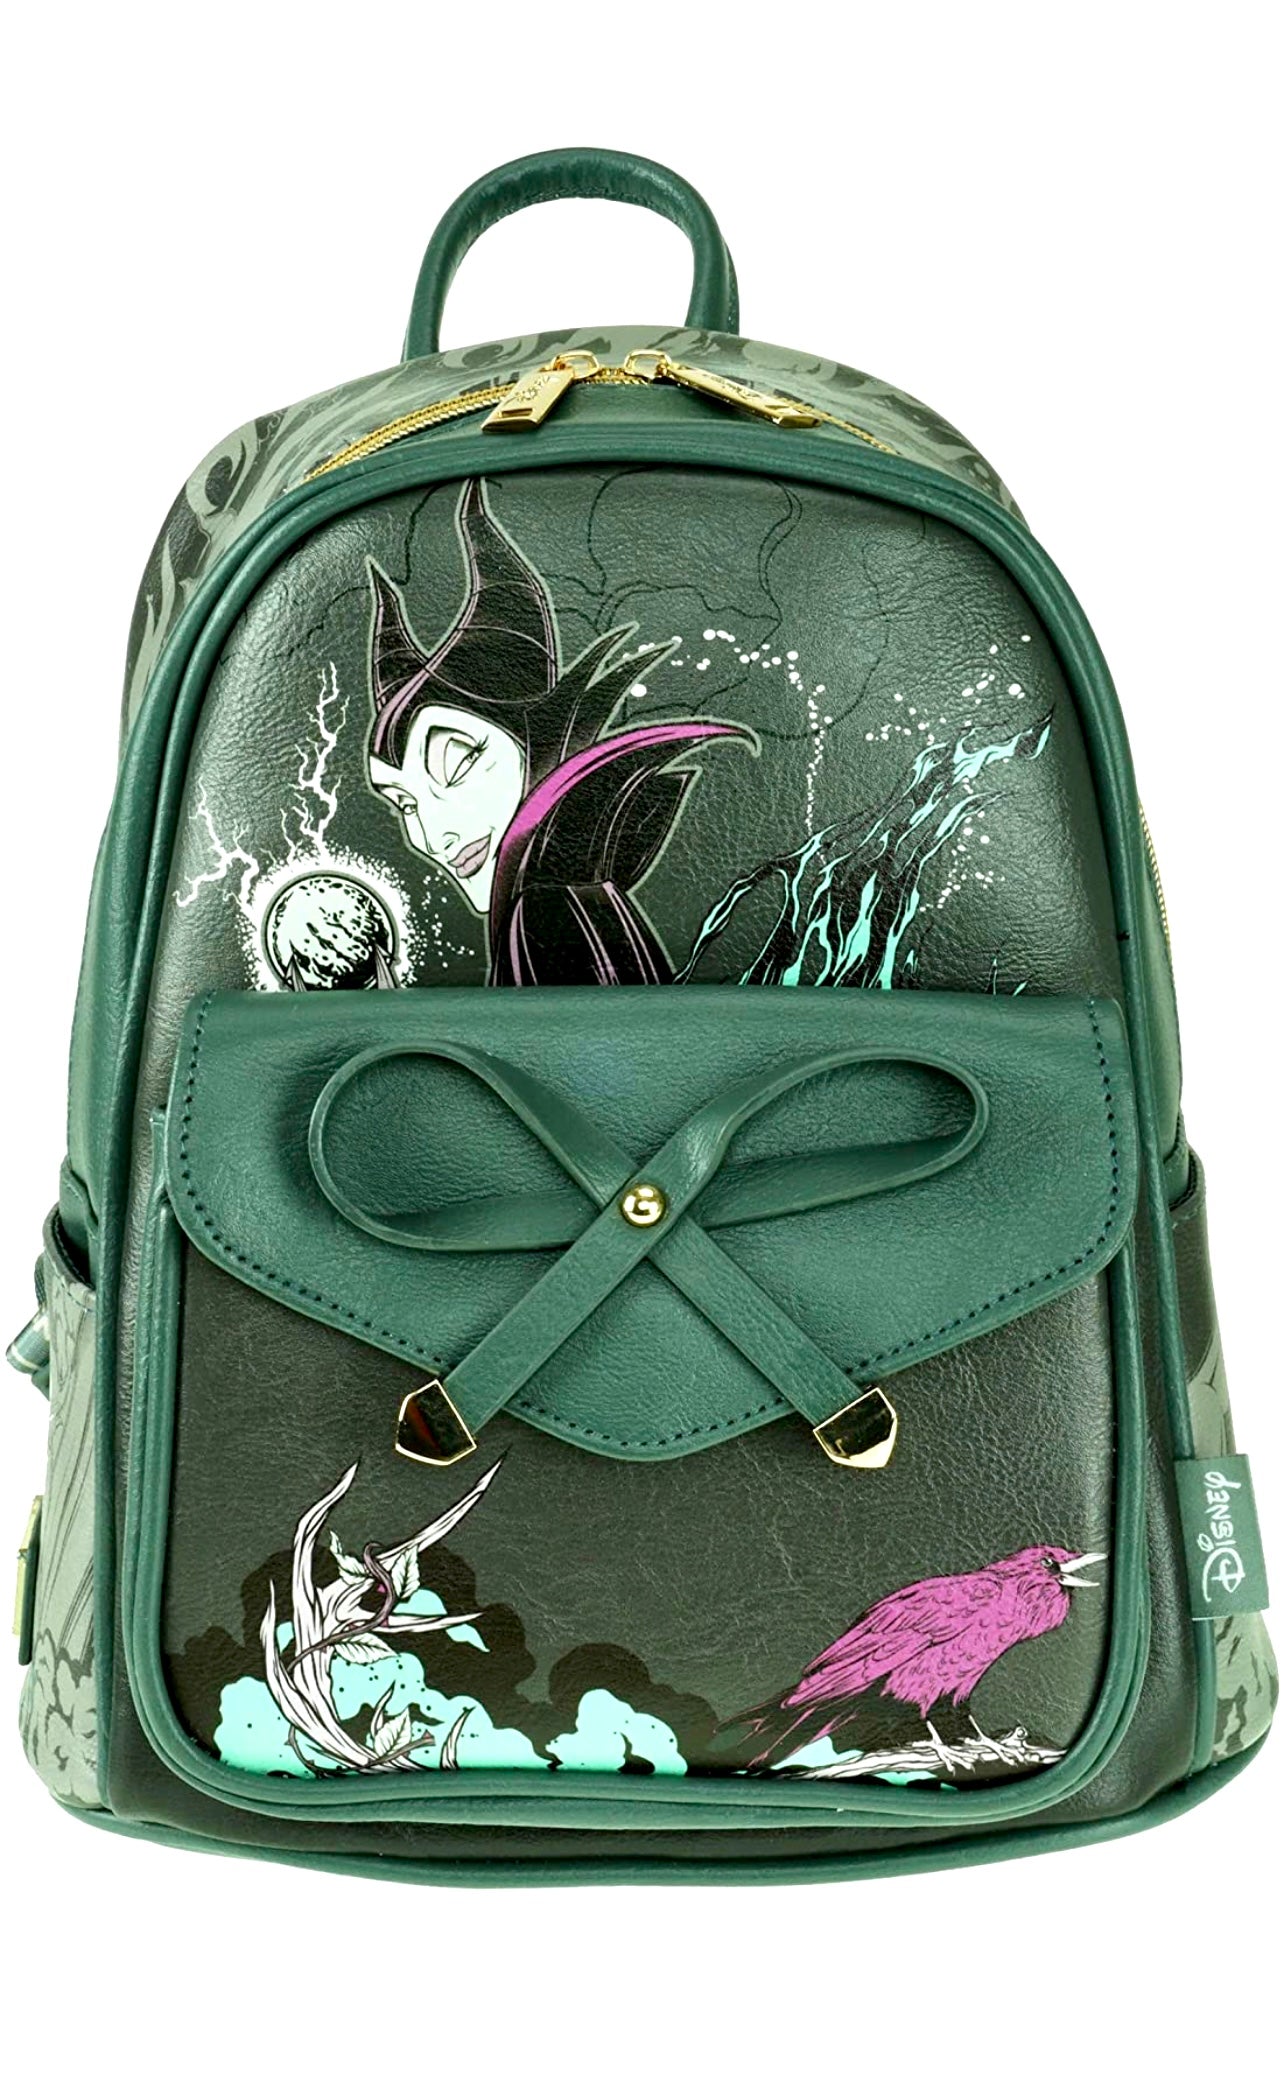 Loungefly Disney Mini Backpack, Sleeping Beauty Maleficent, Disney Villains